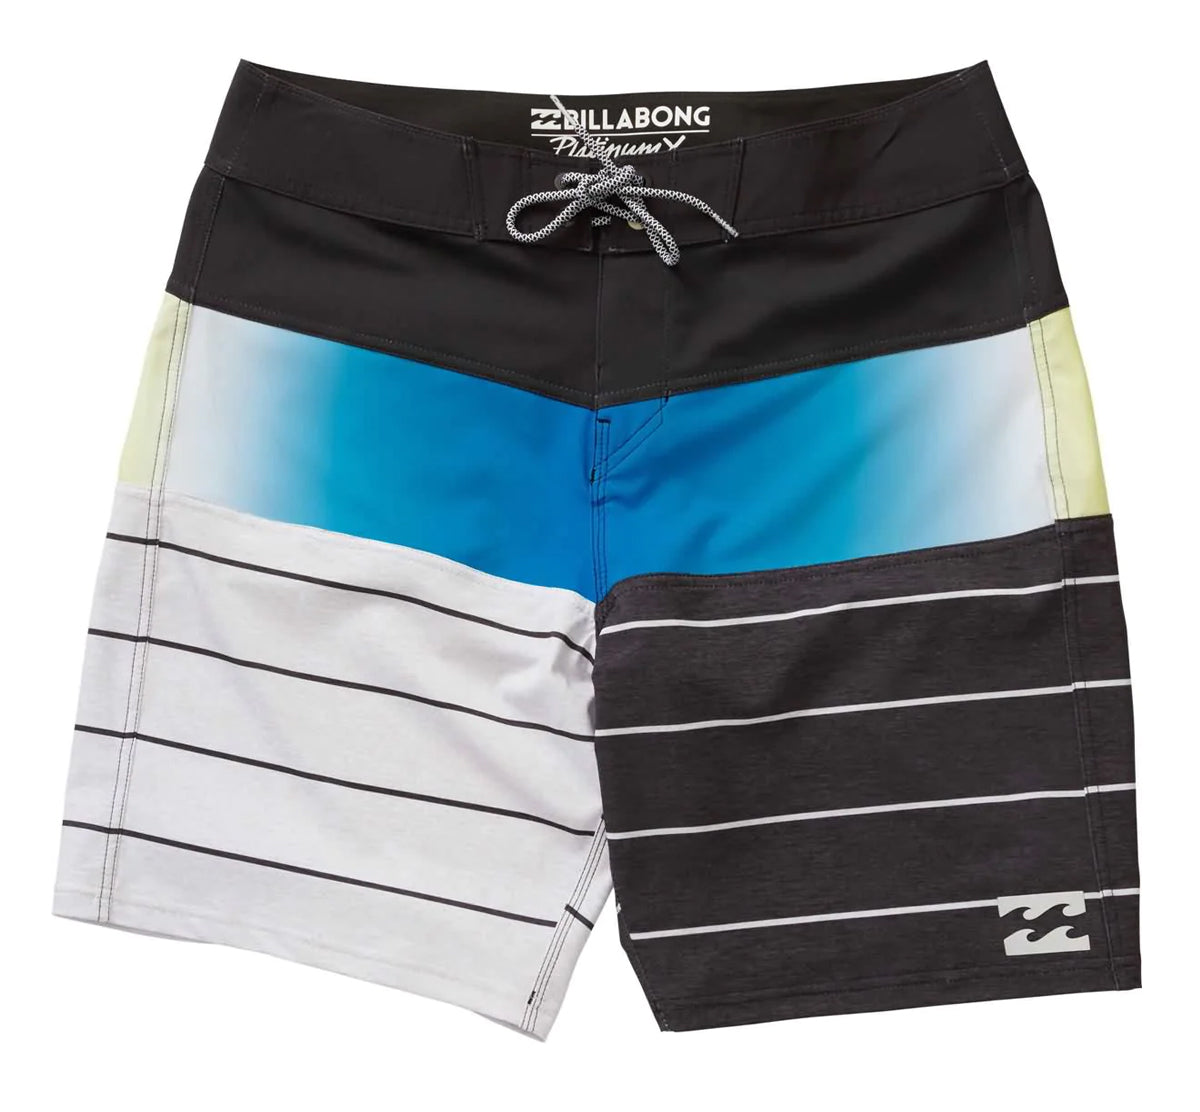 Billabong Tribong X Men's Boardshort Shorts